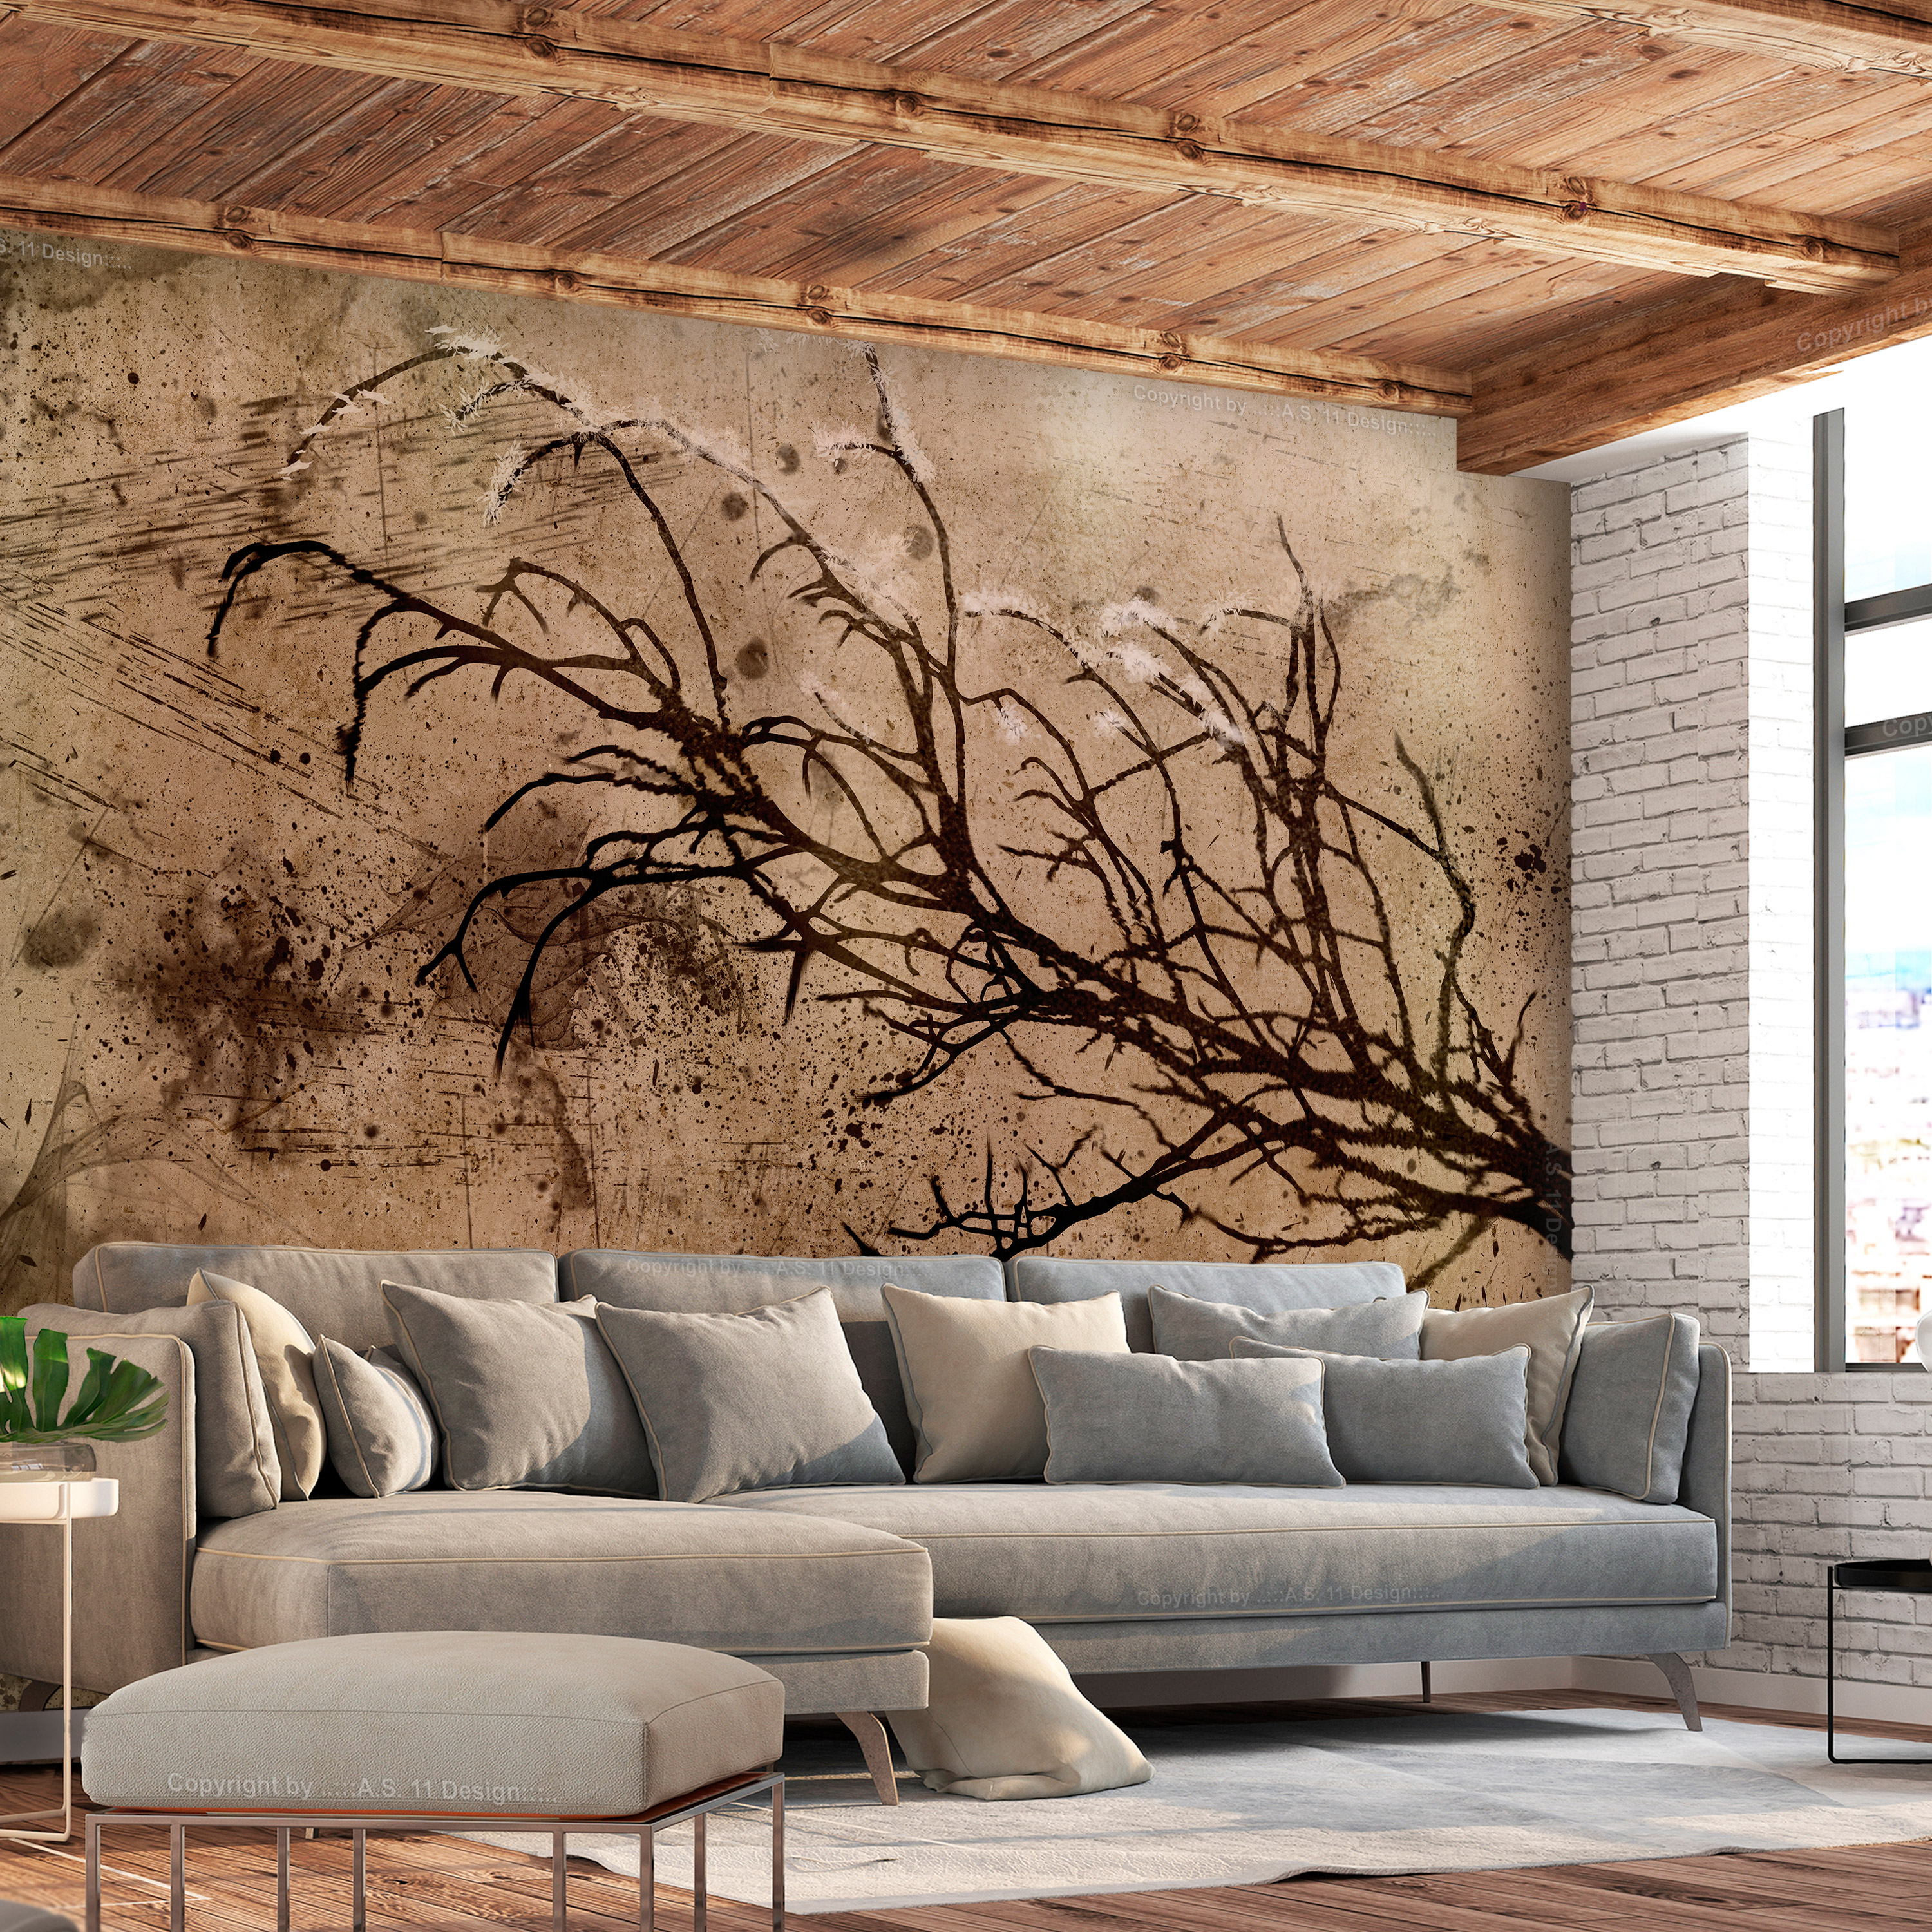 Self-adhesive Wallpaper - Rickety Cherry Tree - 147x105